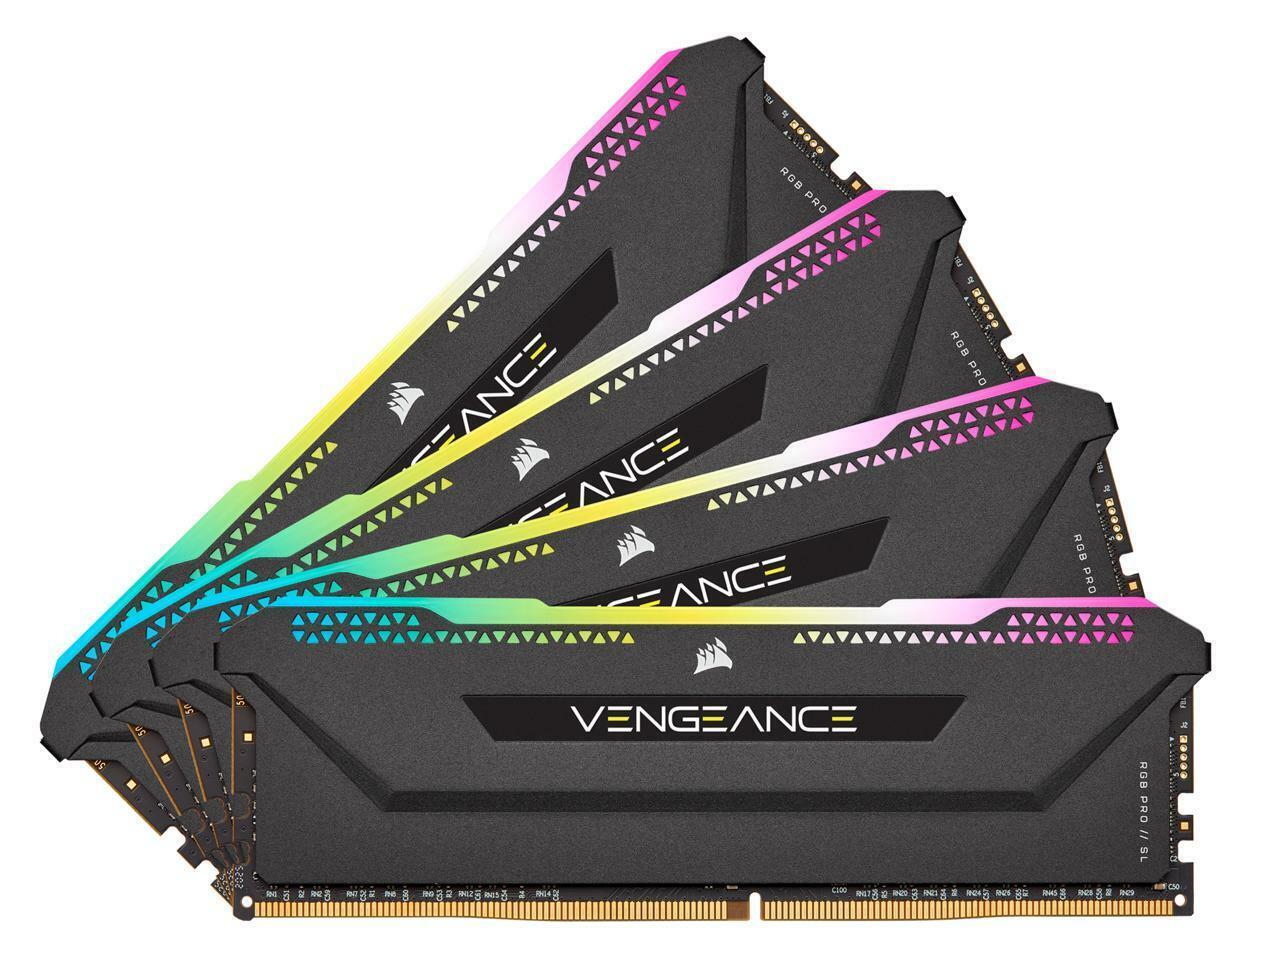 CORSAIR Vengeance RGB Pro SL 32GB (4 x 8GB) 288-Pin DDR4 SDRAM DDR4 3200 (PC4 25